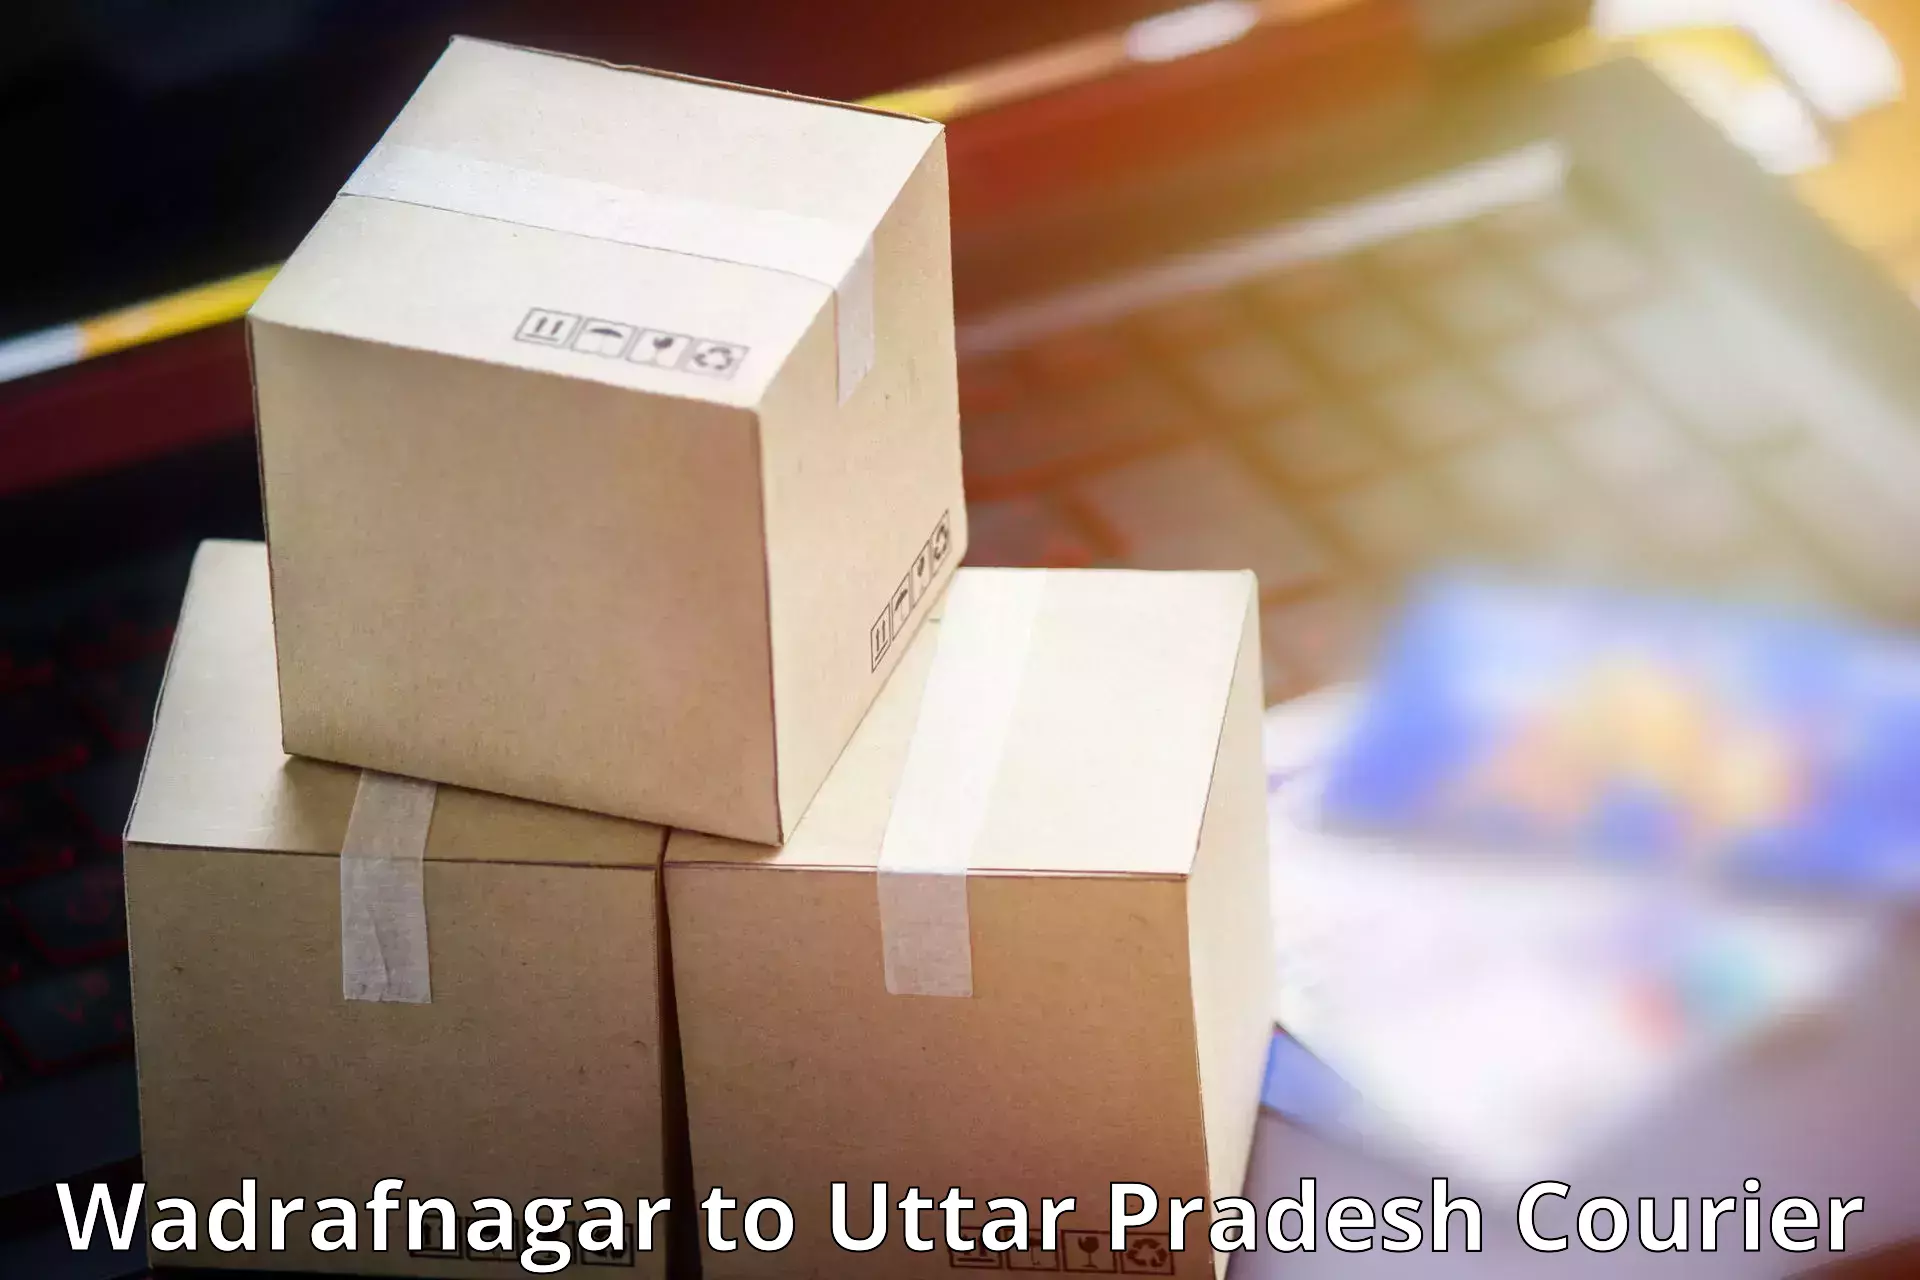 Diverse delivery methods Wadrafnagar to Dhaurahara